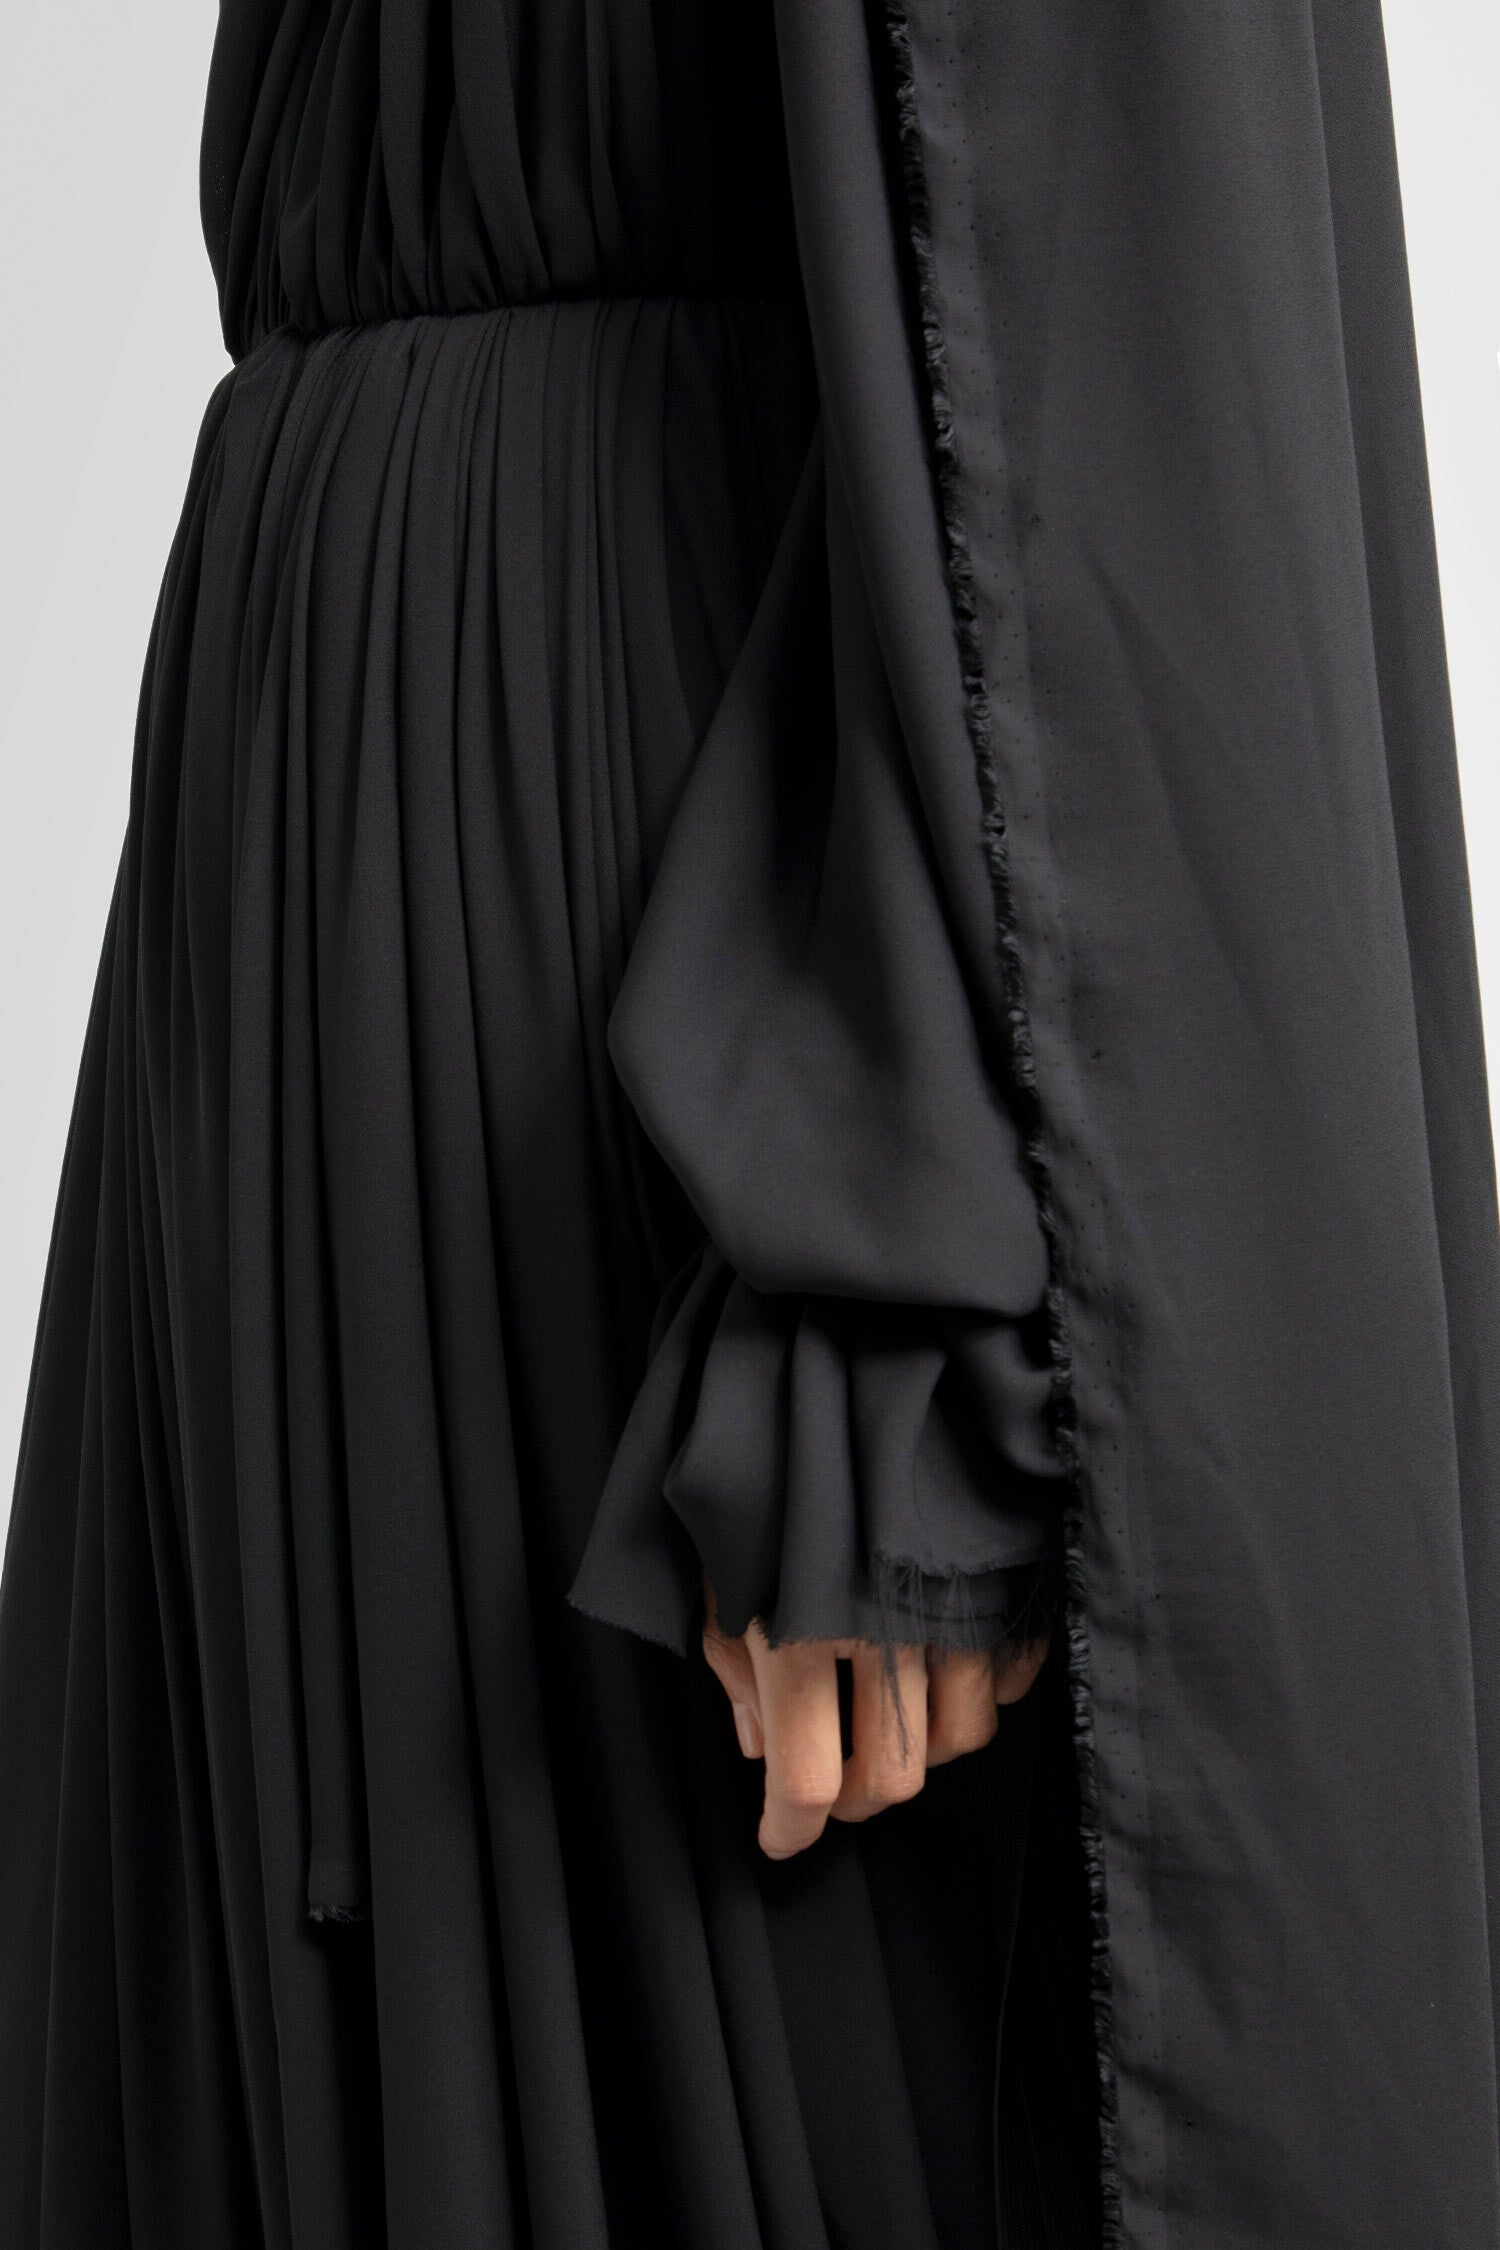 BALENCIAGA WOMAN BLACK DRESSES